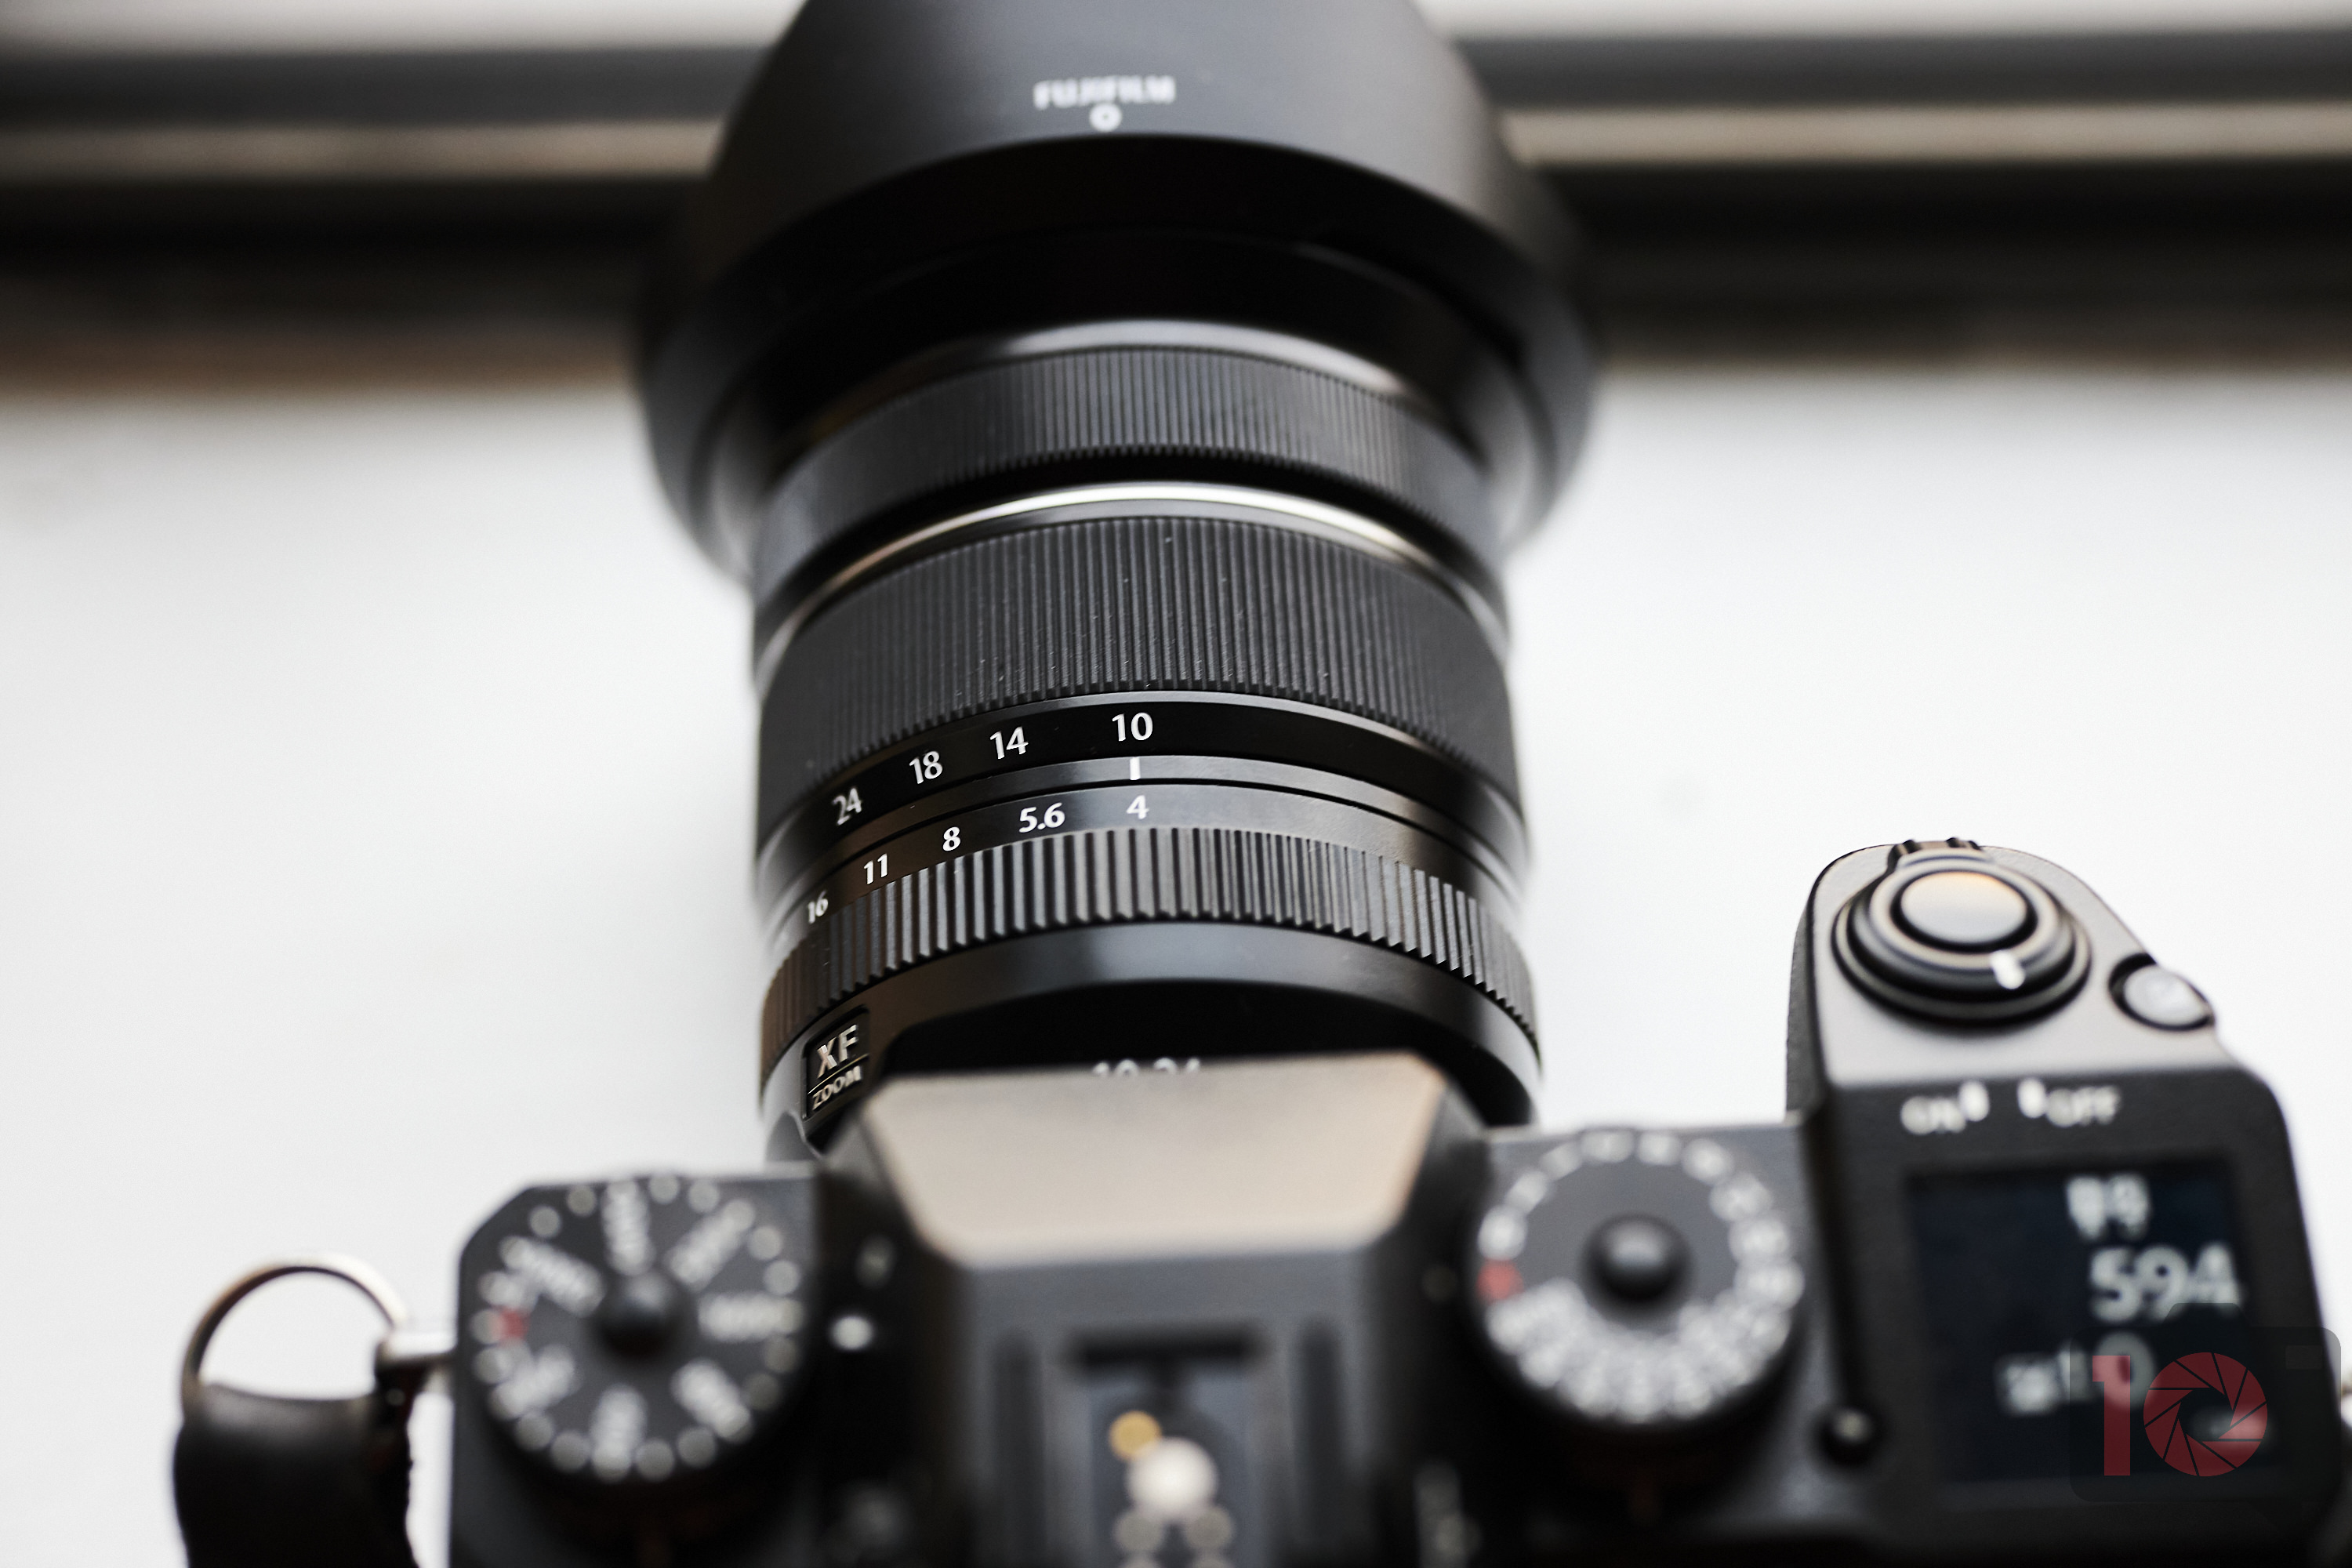 How The Fujifilm 10-24mm f4 R OIS WR Lens is Impressing Us So Far